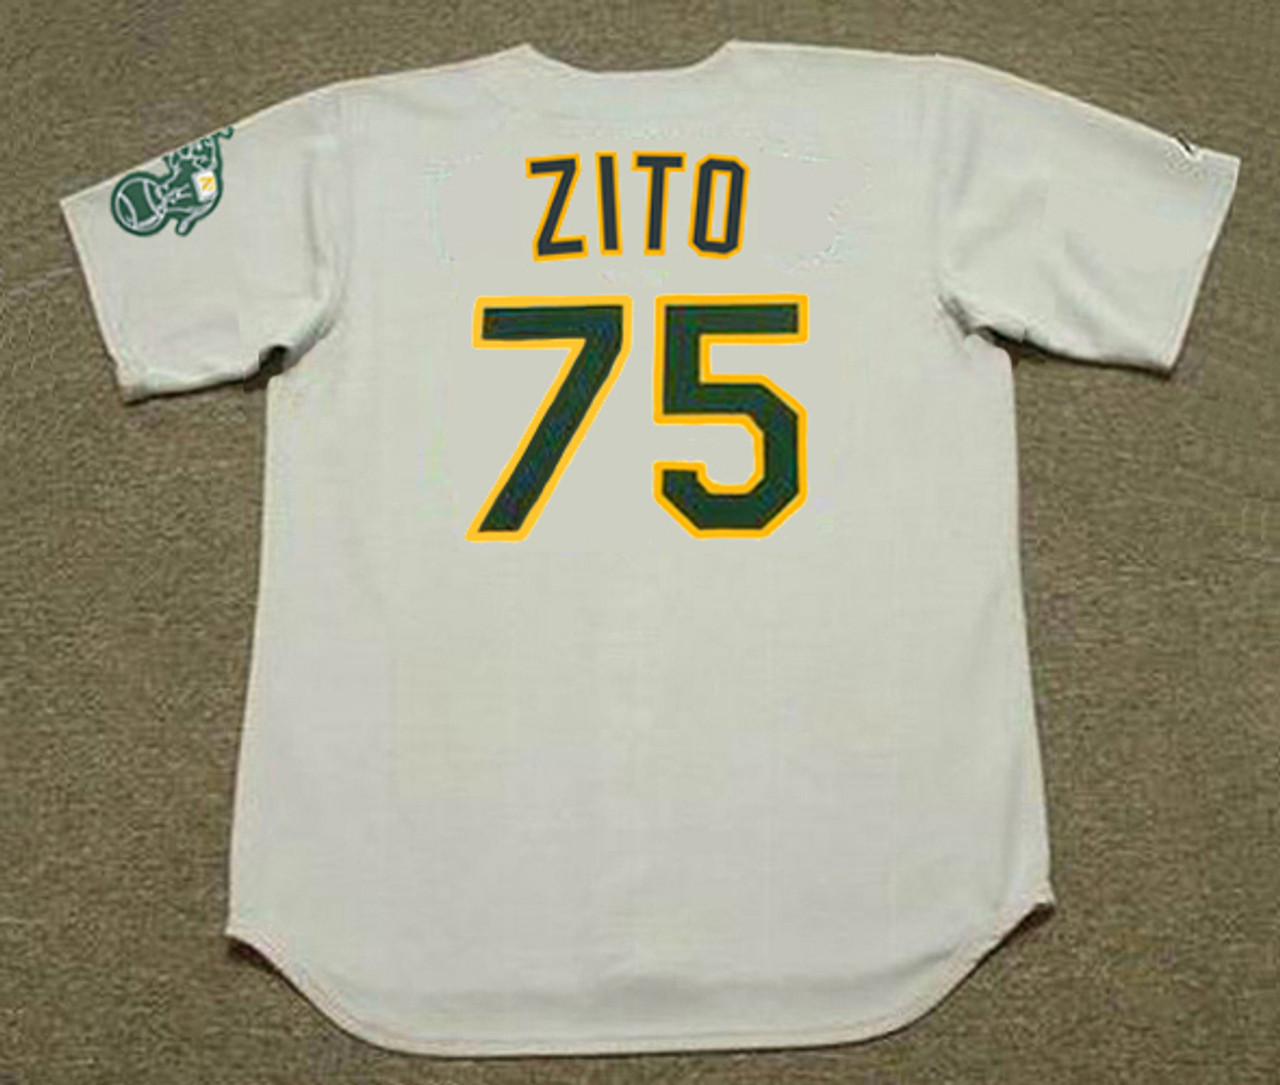 Barry Zito Jersey - Oakland Athletics 2000 Throwback MLB Baseball